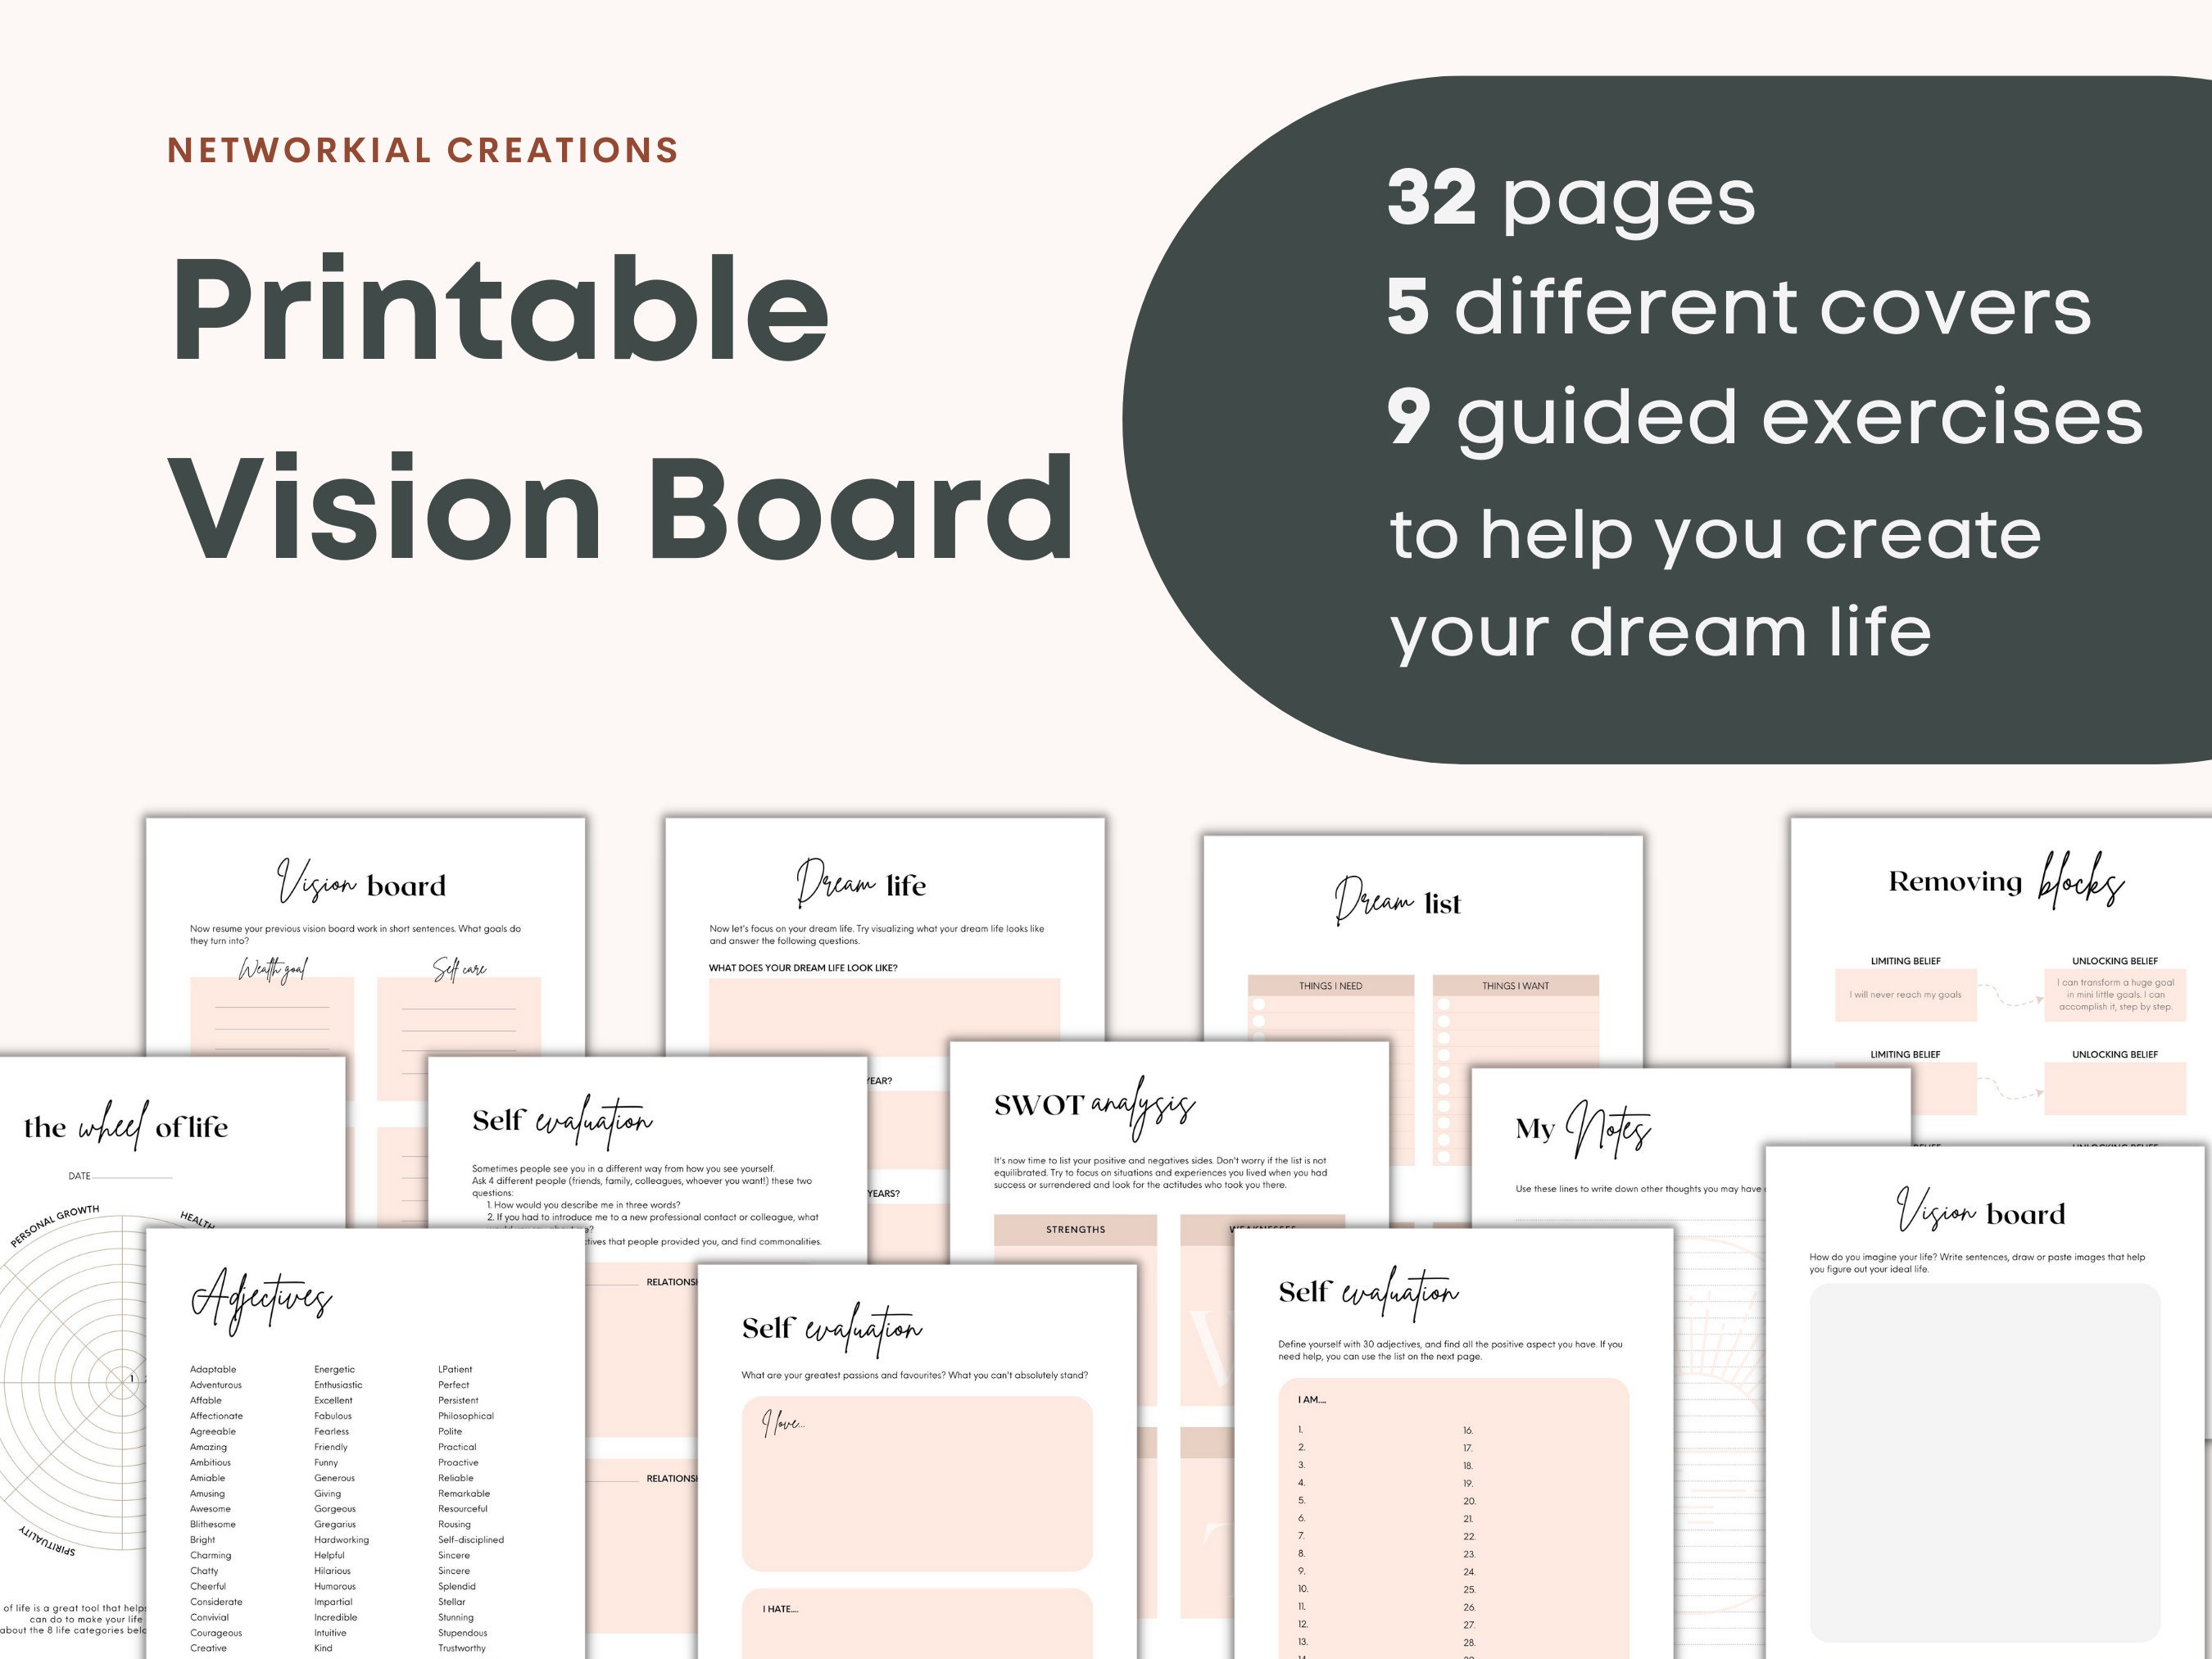 Vision Board Planner Insert, Digital Planners, Web Design